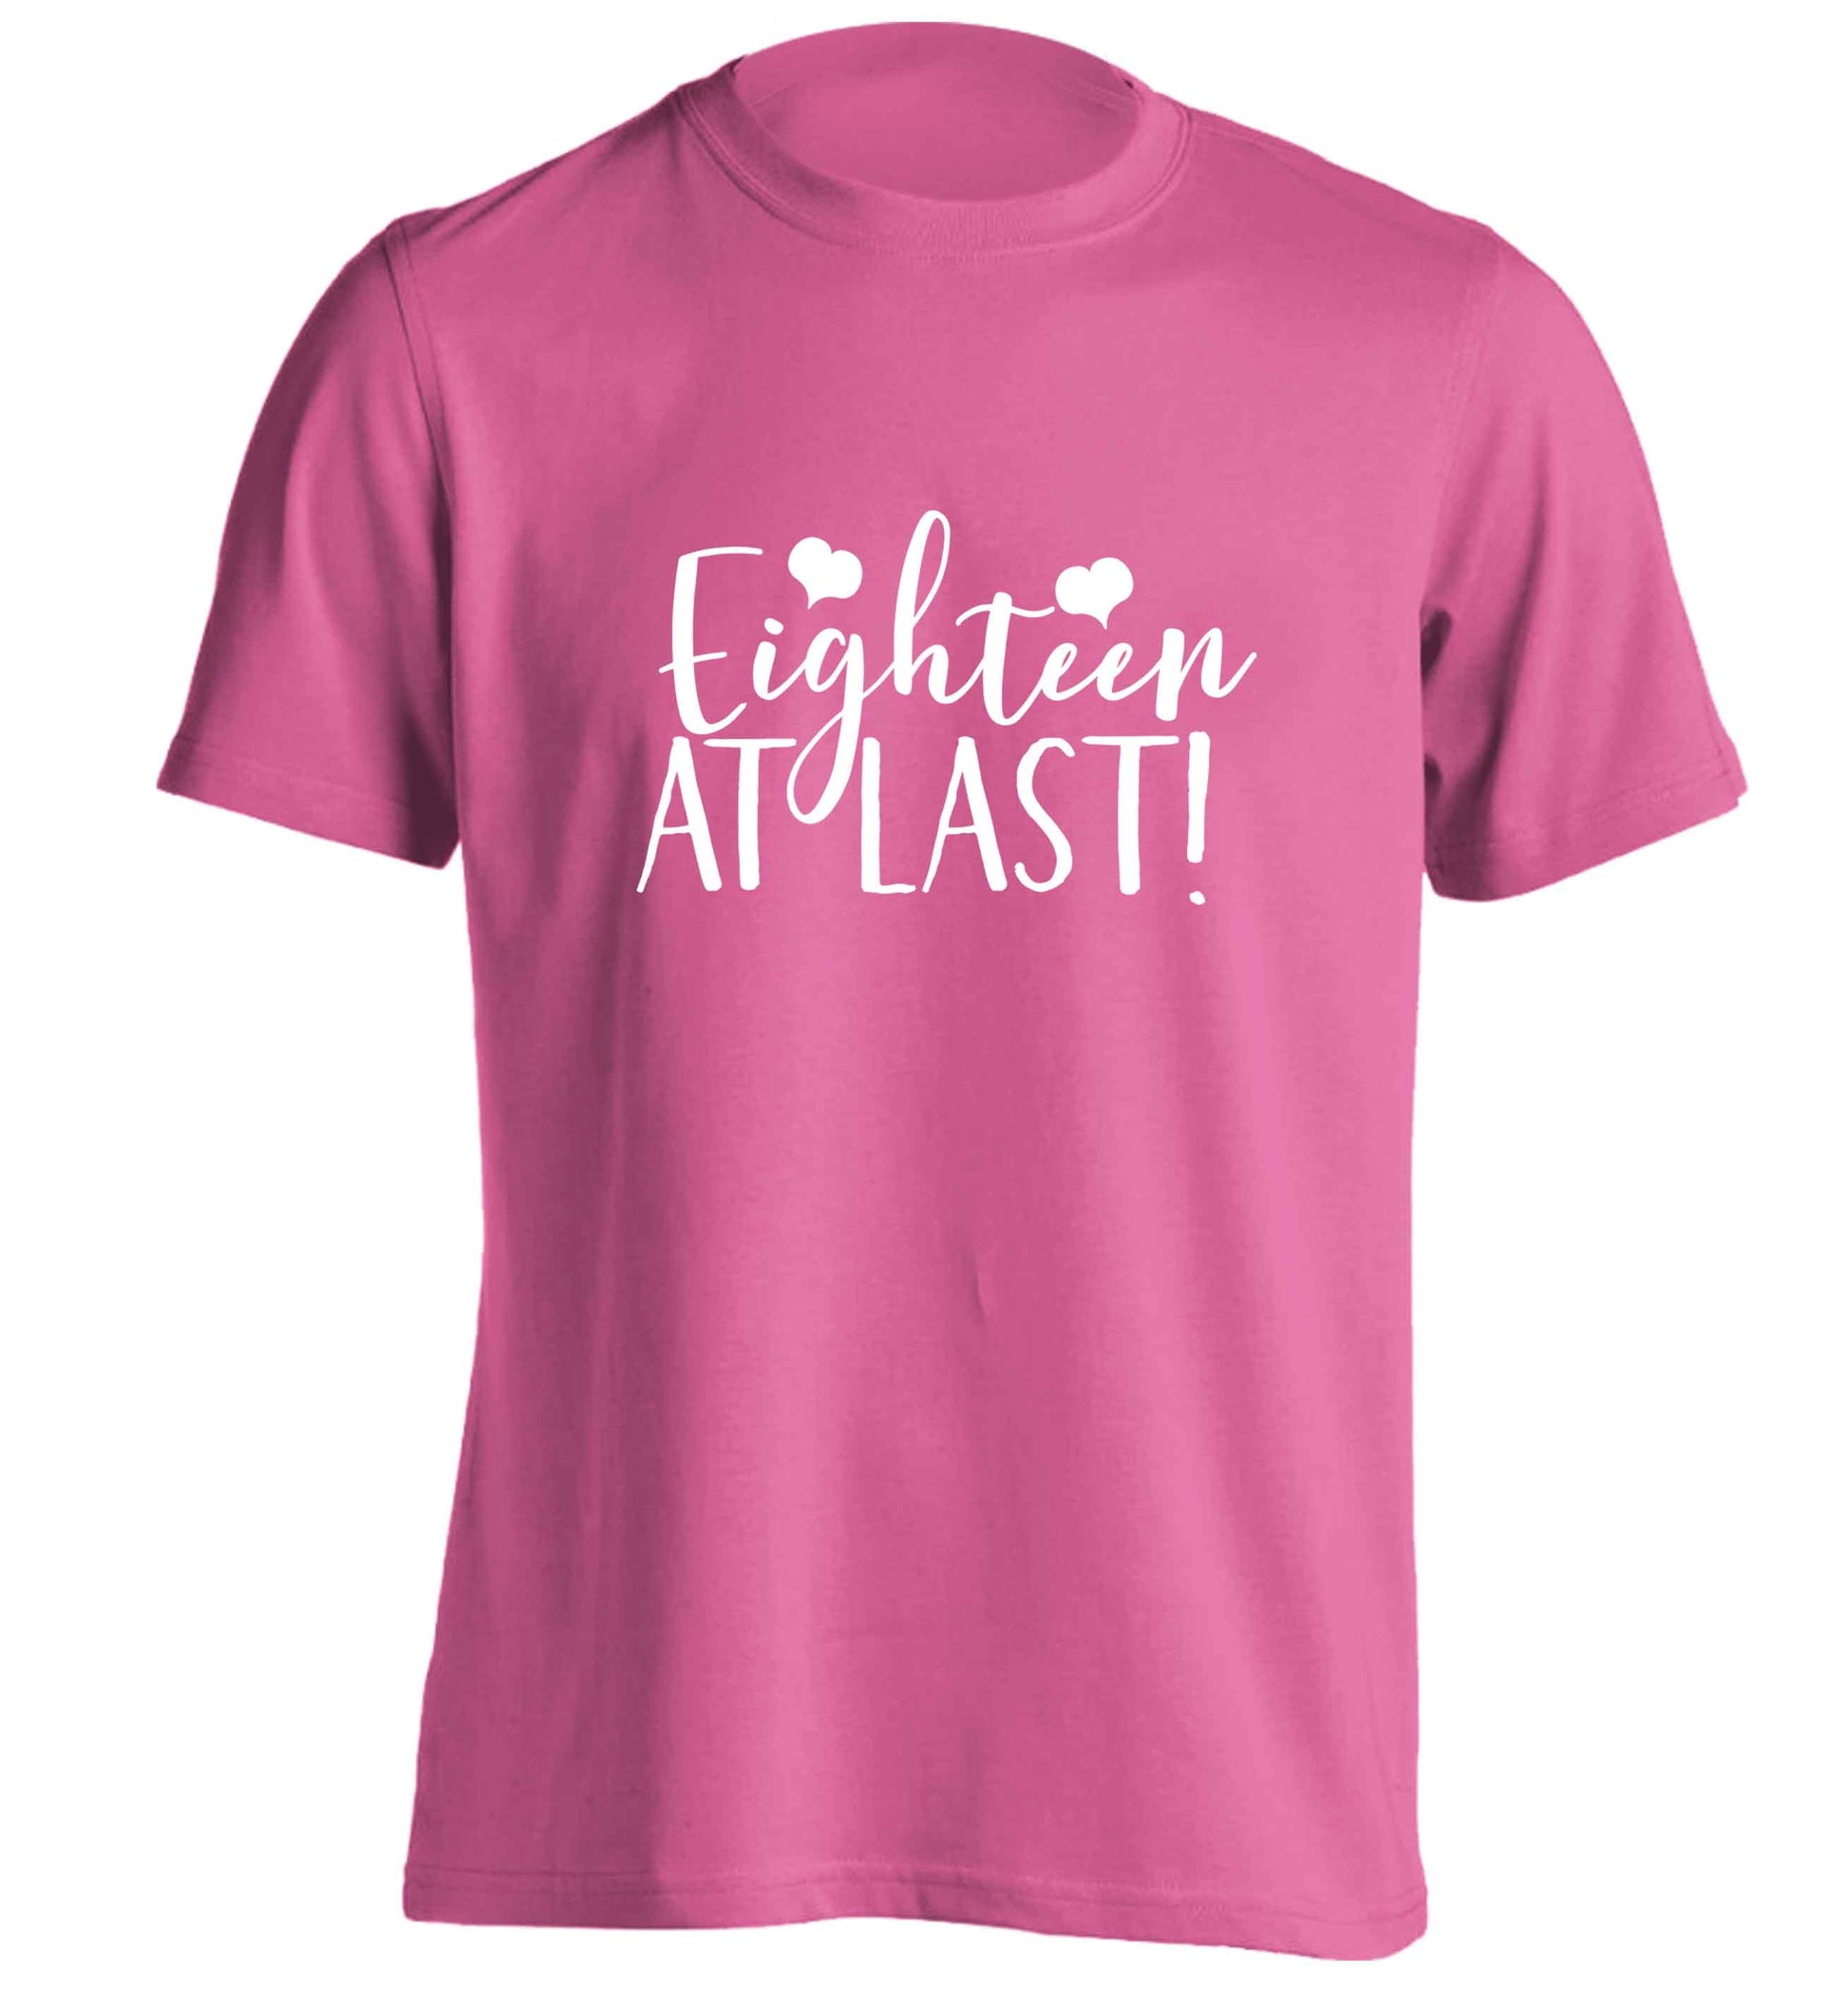 Eighteen at last!adults unisex pink Tshirt 2XL